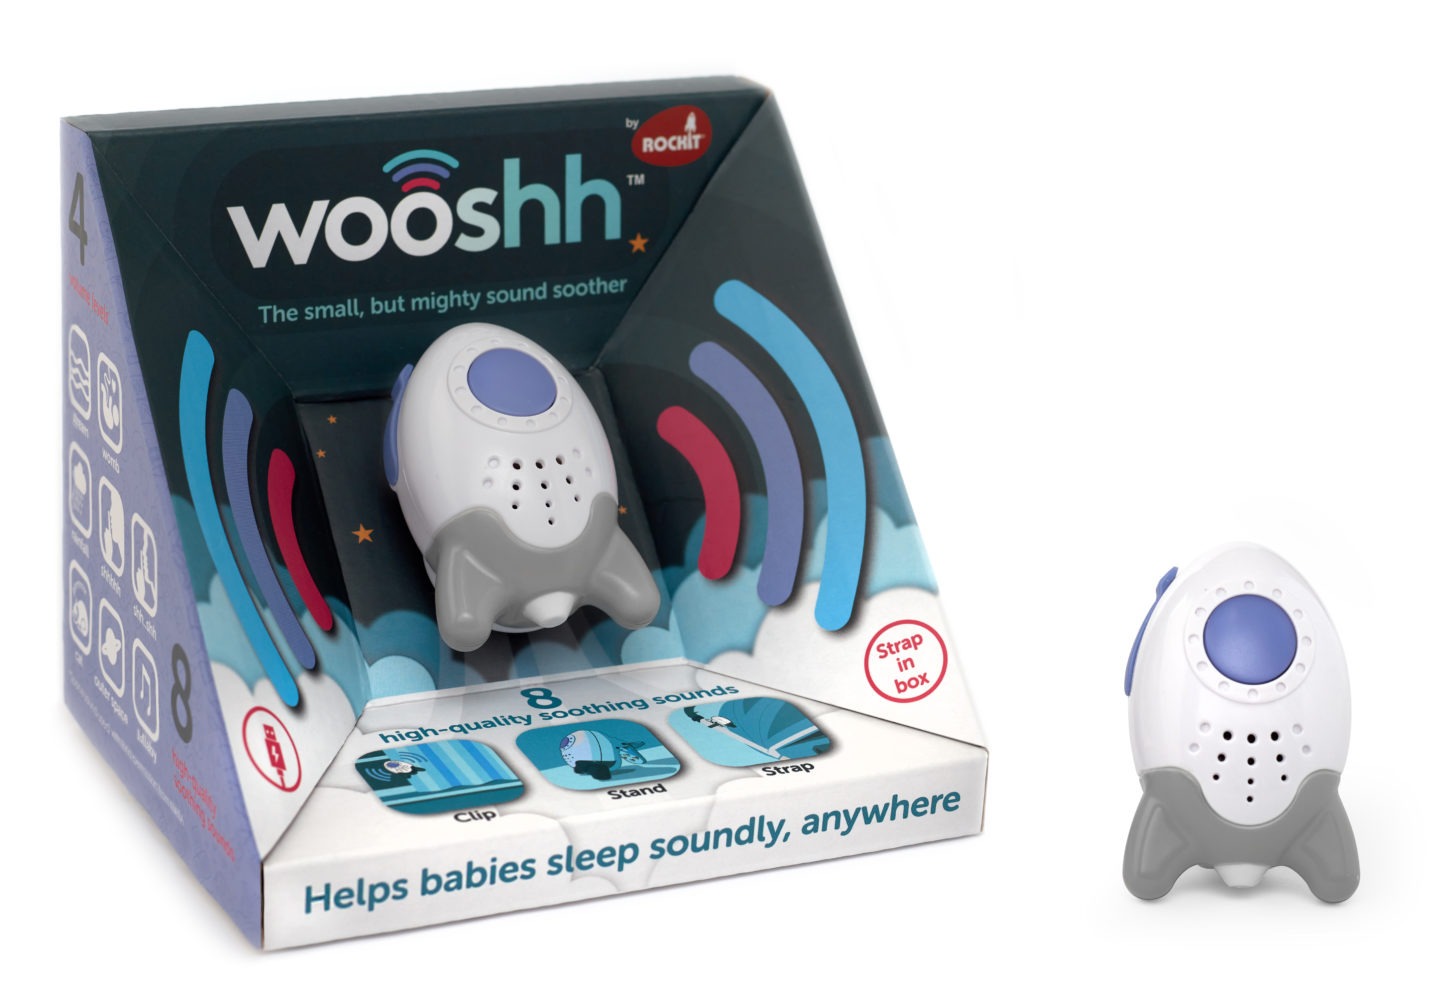 Rockit Woosh - Portable Sound Machine